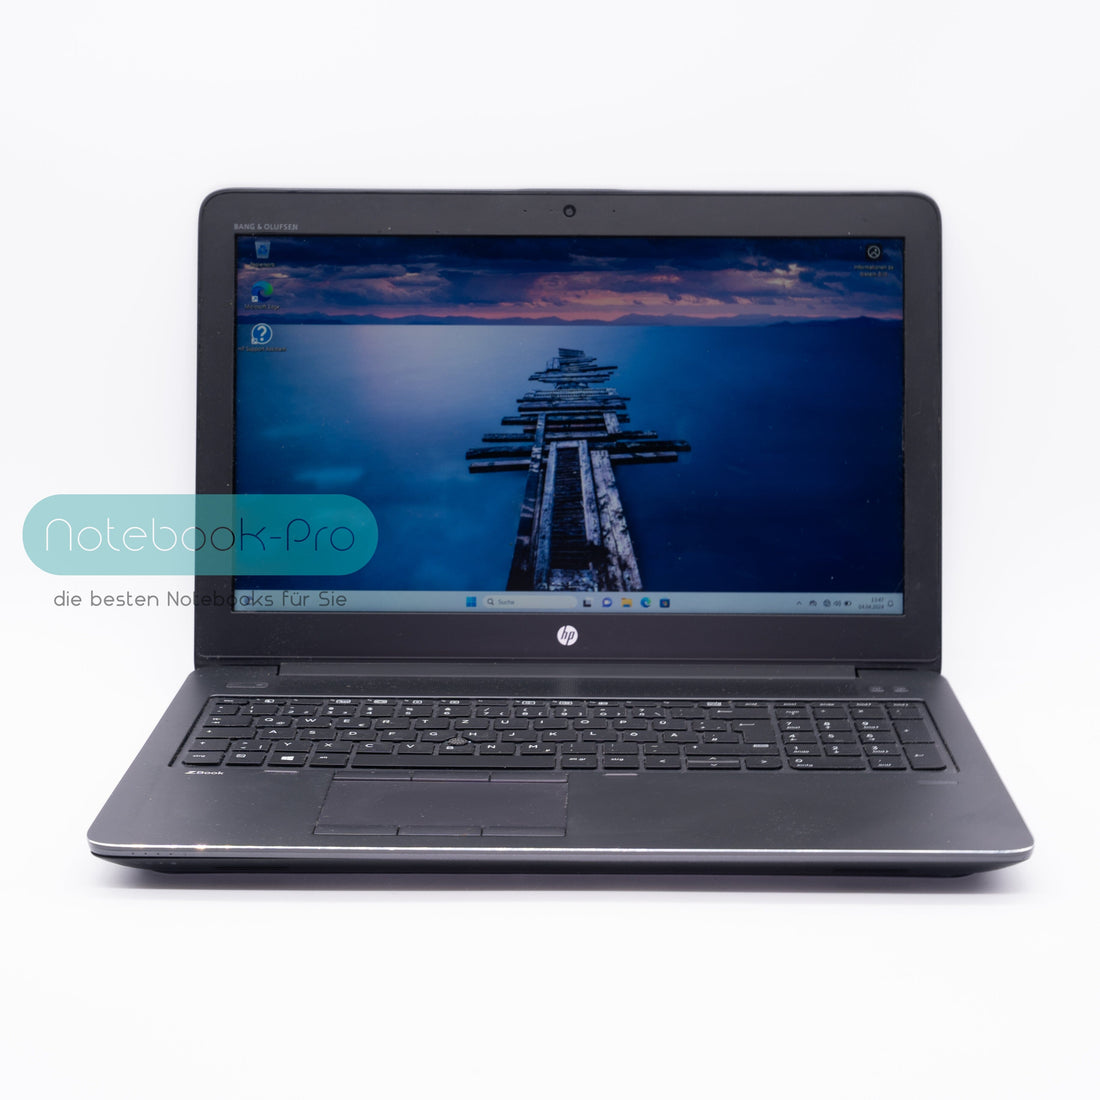 HP Zbook 15 G3 Intel Core i7-6820HQ NVIDIA QUADRO M2000M 512GB SSD Laptops Notebook-Pro 